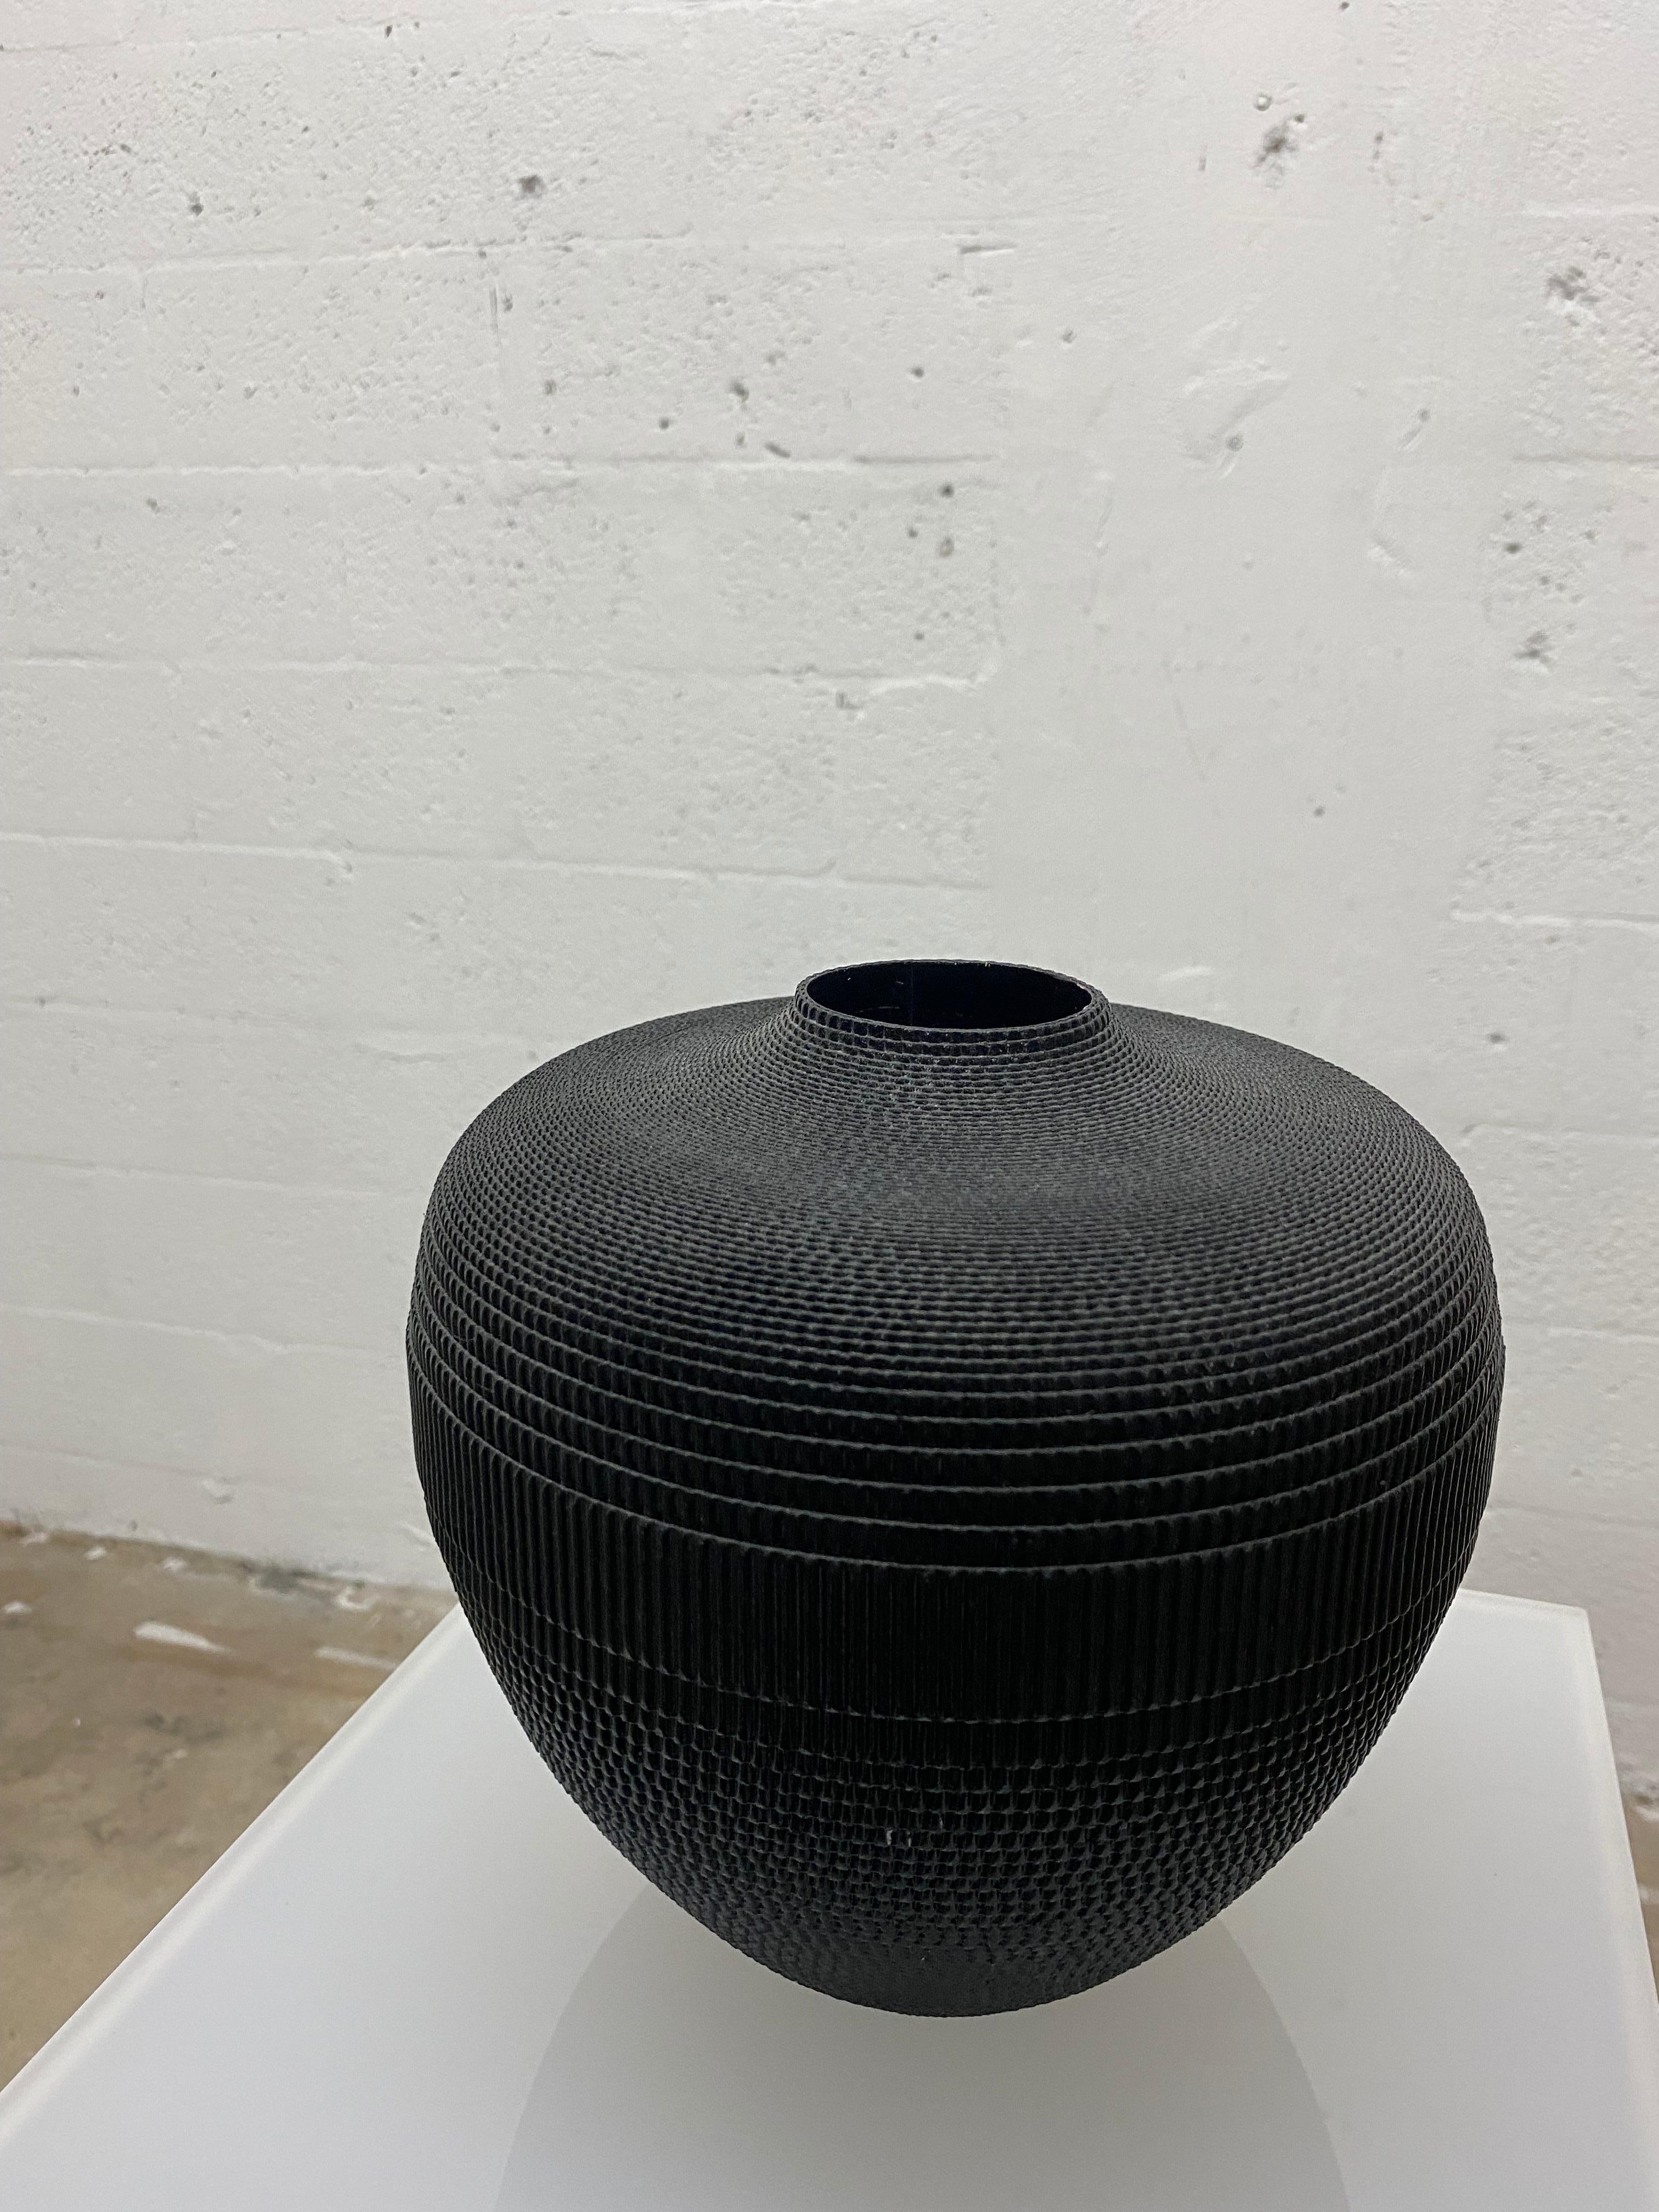 American Postmodern Petite Black Corrugated Cardboard Vase by Flute, Chicago